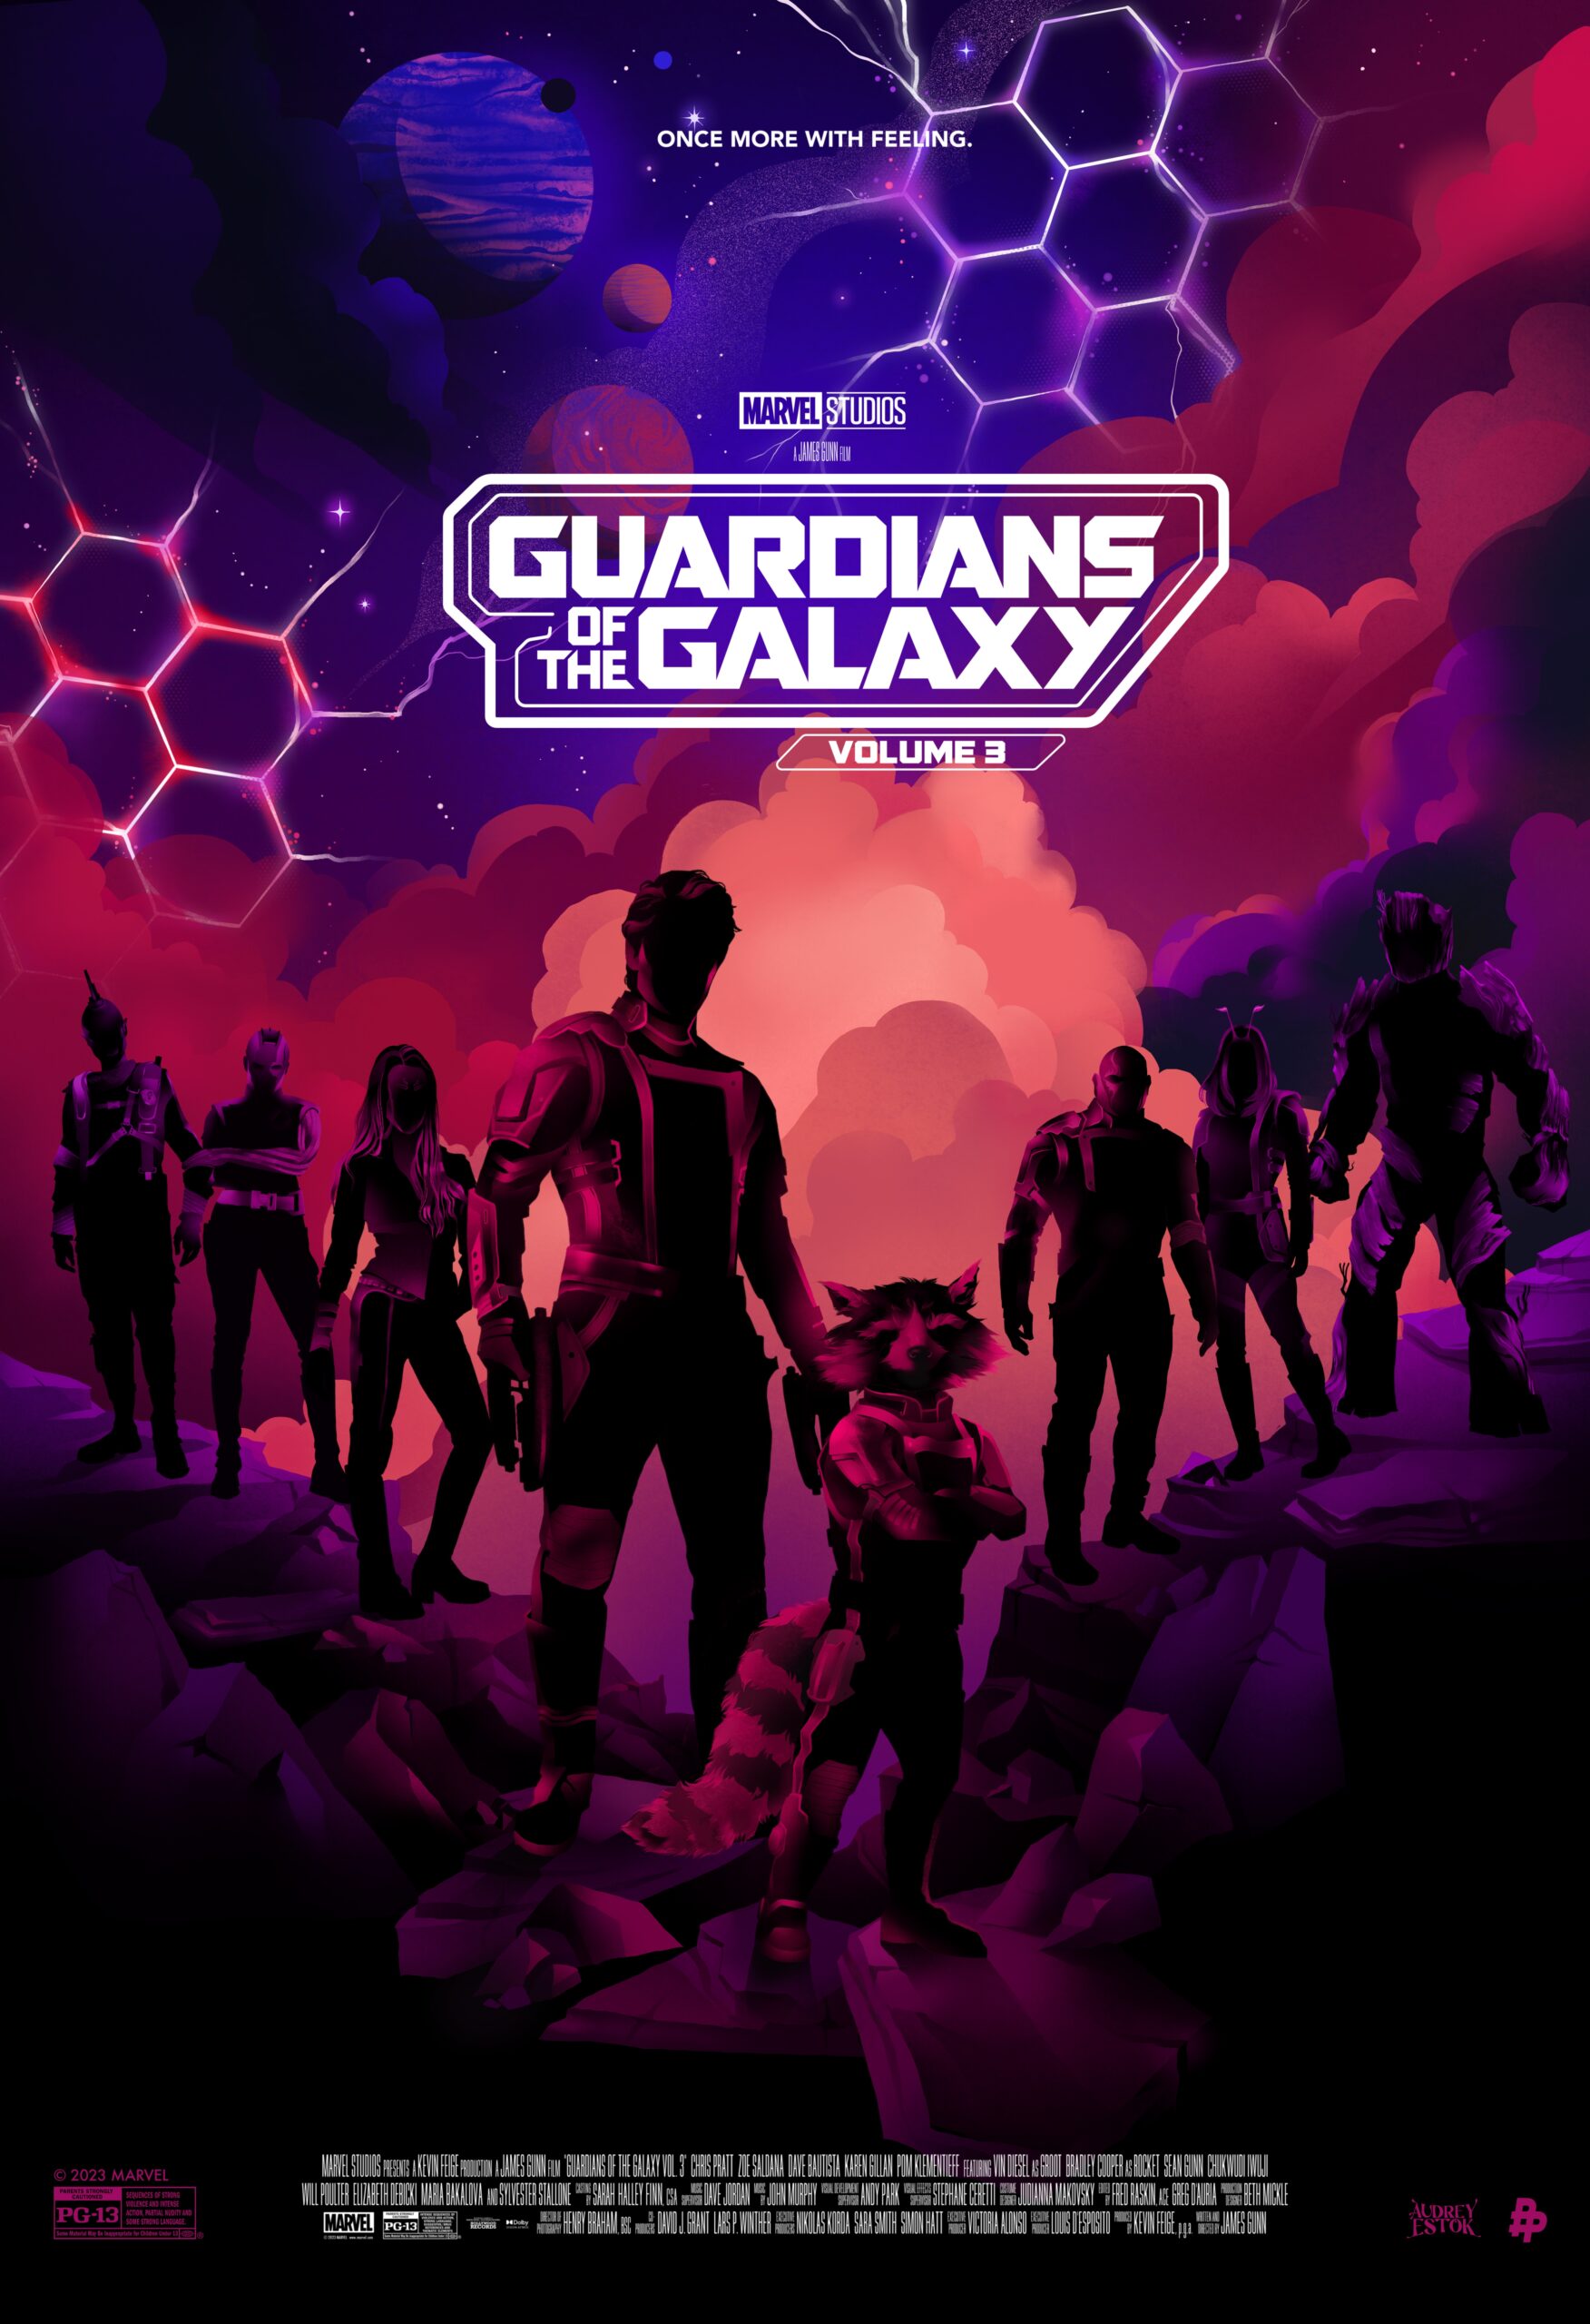 Artwork by Marvel Studios – Guardians of the Galaxy Vol 3 – Cinema Partnerships